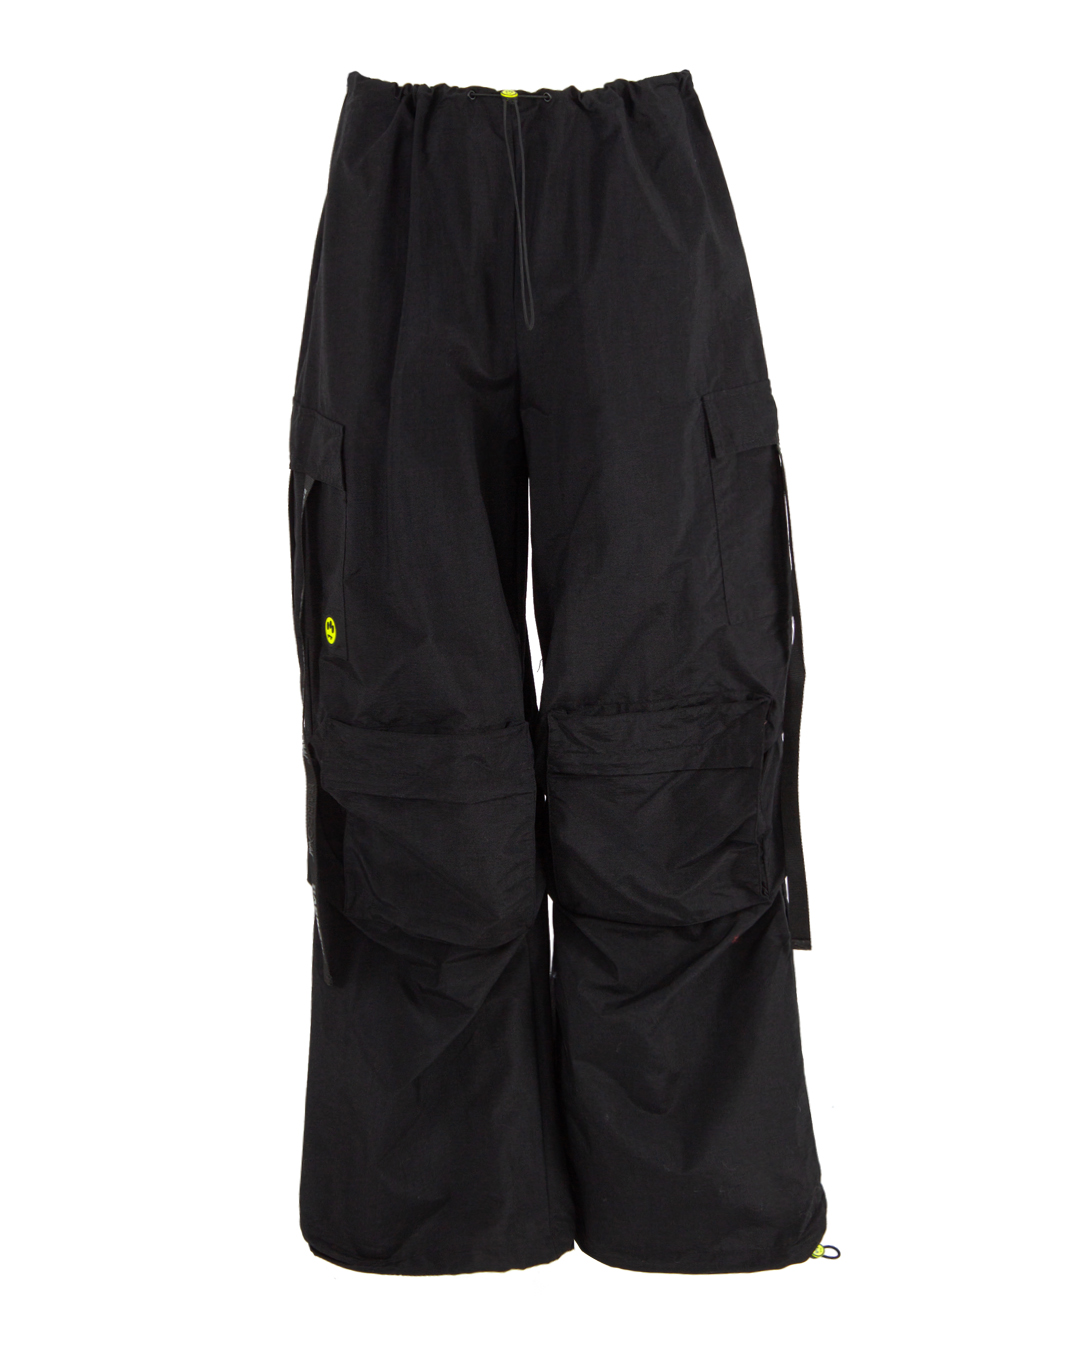 широкие брюки BARROW F3BWMAPA008 черный s/m, размер s/m F3BWMAPA008 черный s/m - фото 1